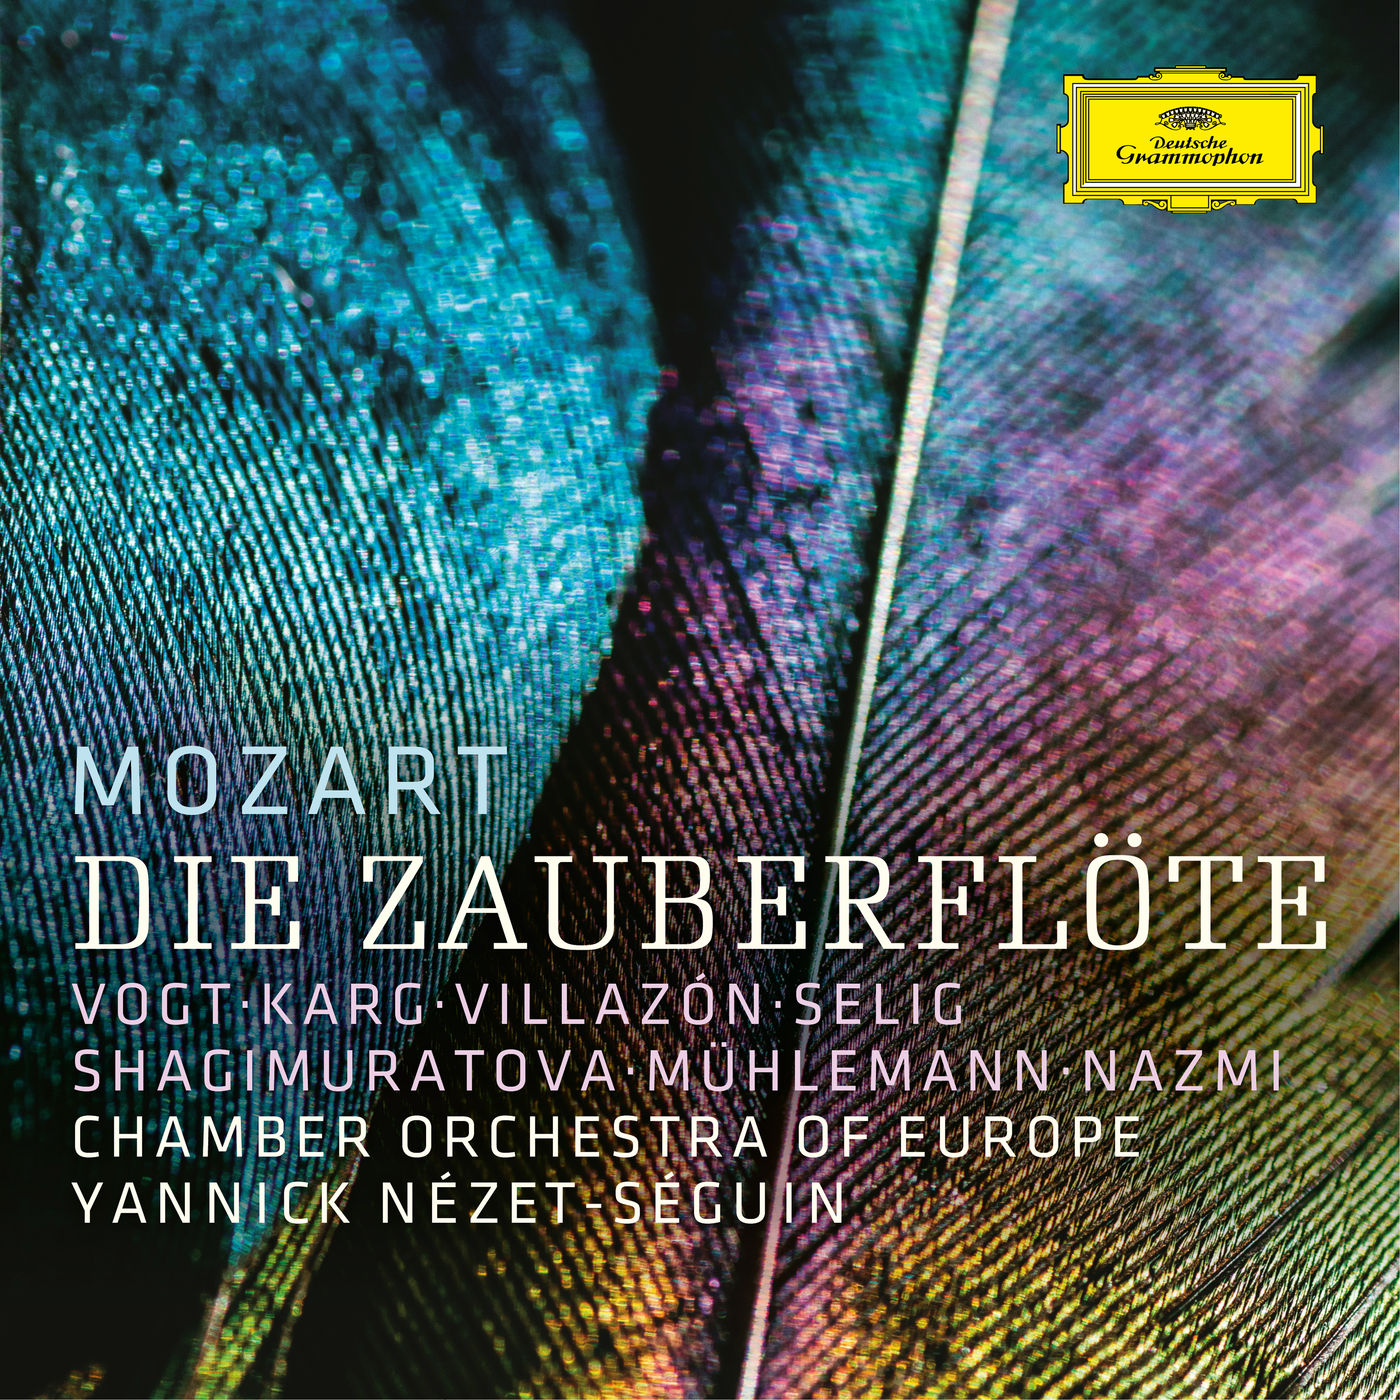 Chamber Orchestra Of Europe and Yannick Nezet-Seguin - Mozart: Die Zauberflote (2019) [FLAC 24bit/96kHz]